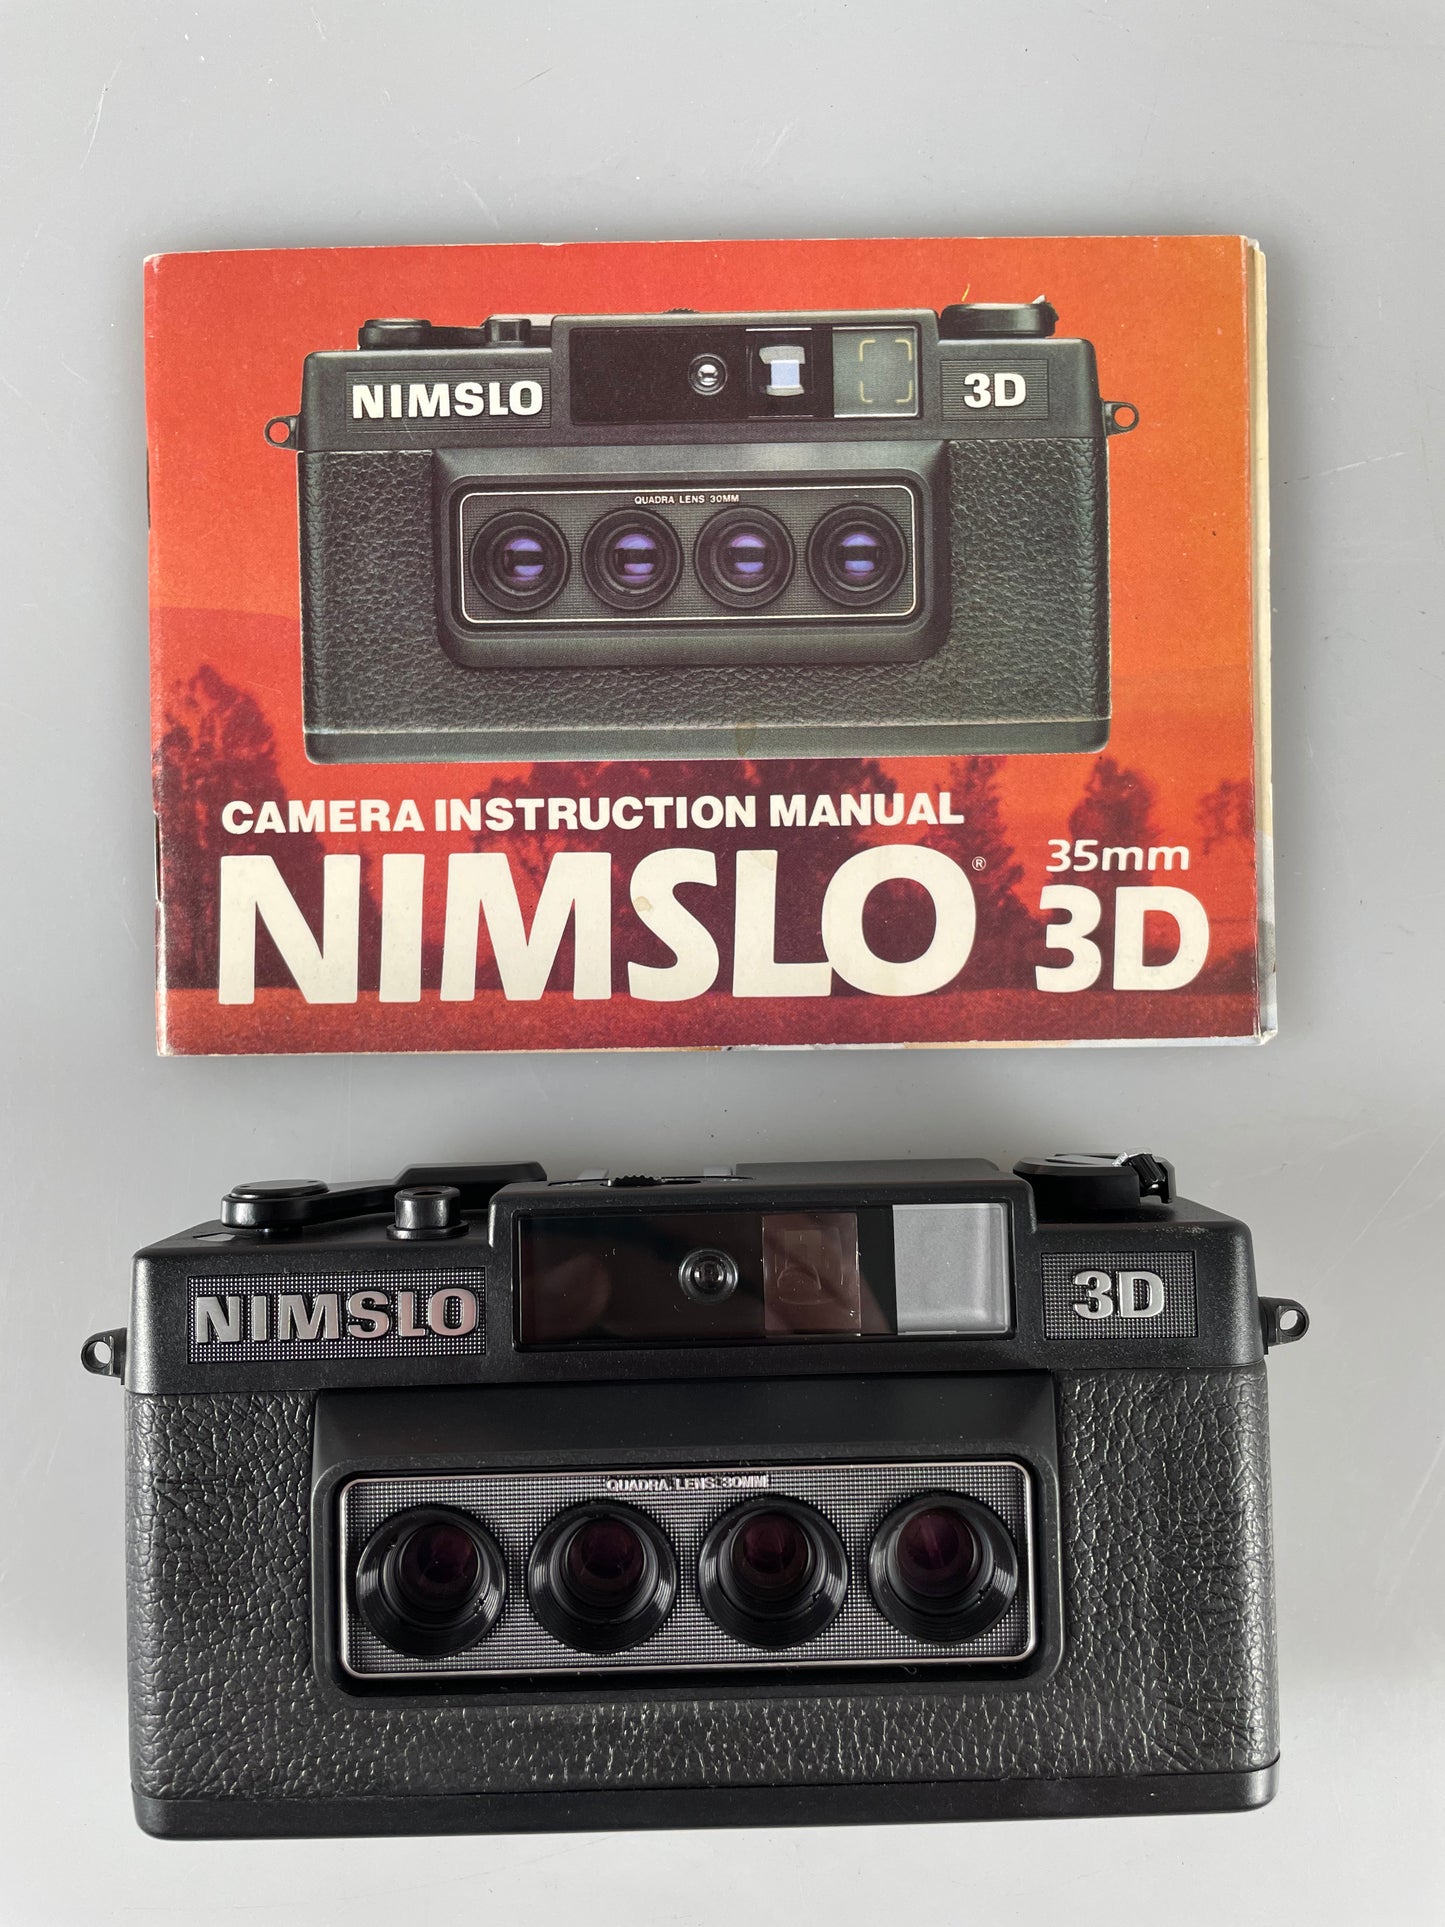 Nimslo 3D Camera Made in Japan